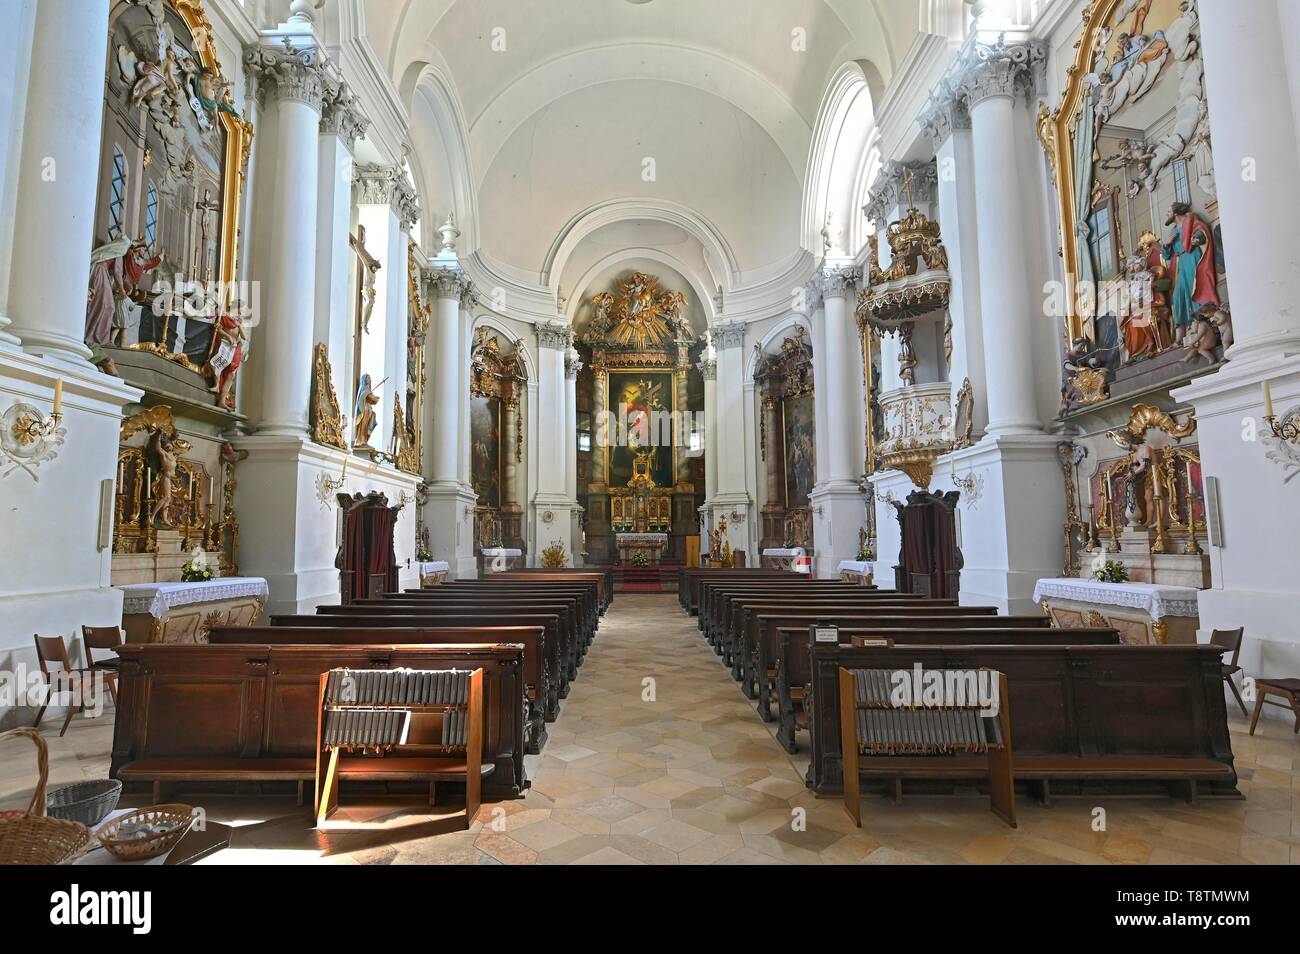 Interior view of the monastery church with sanctuary, Reisach monastery near Oberaudorf, Upper Bavaria, Bavaria, Germany Stock Photo